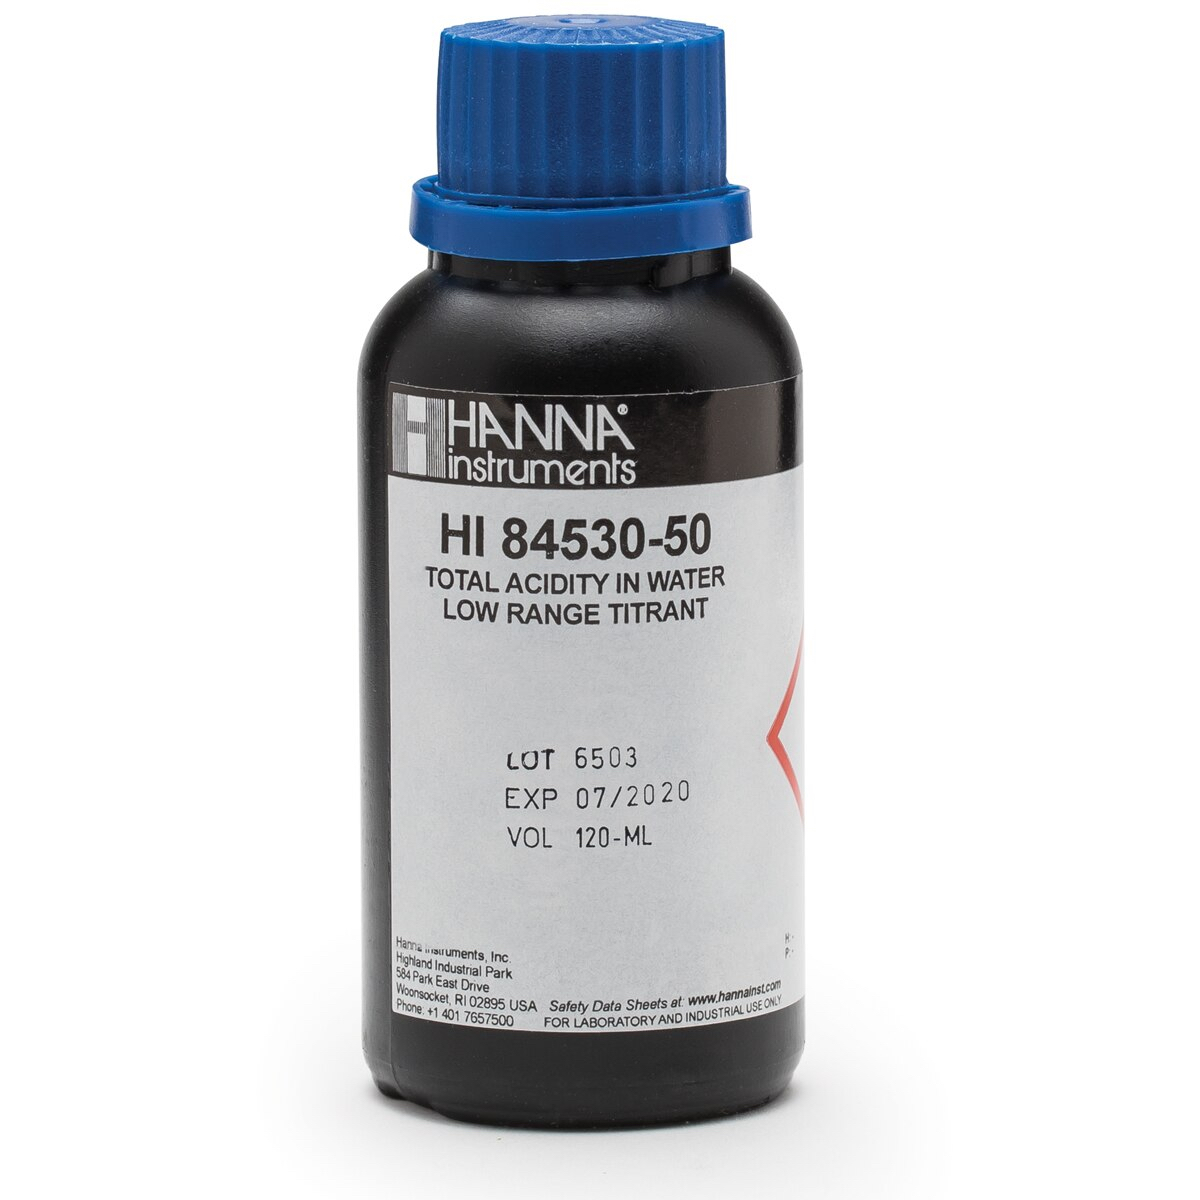 Low Range Titrant for Titratable Acidity in Water Mini Titrator - HI84530-50